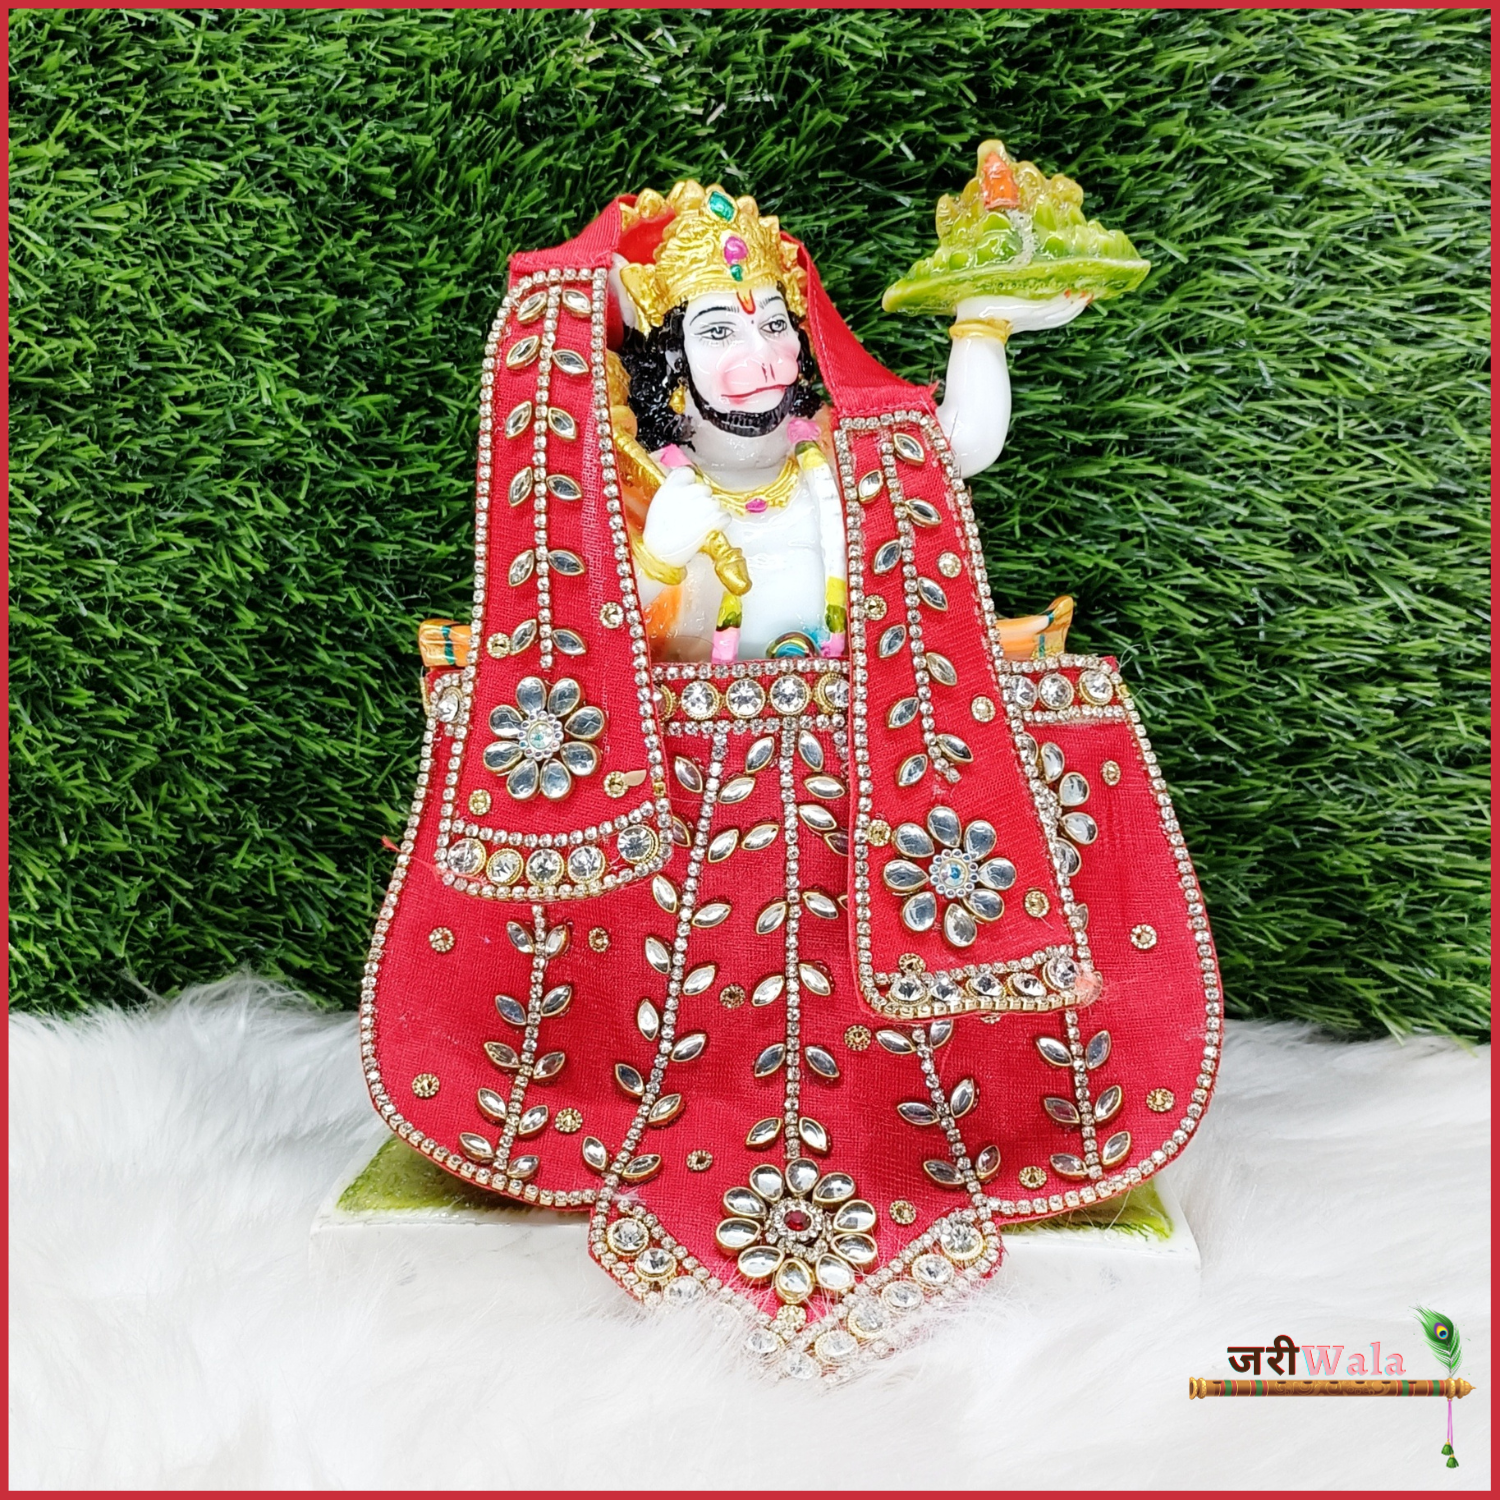 Hanuman ji Poshak - 10 Inch Length Chola Dress For 12 to 15 Inch